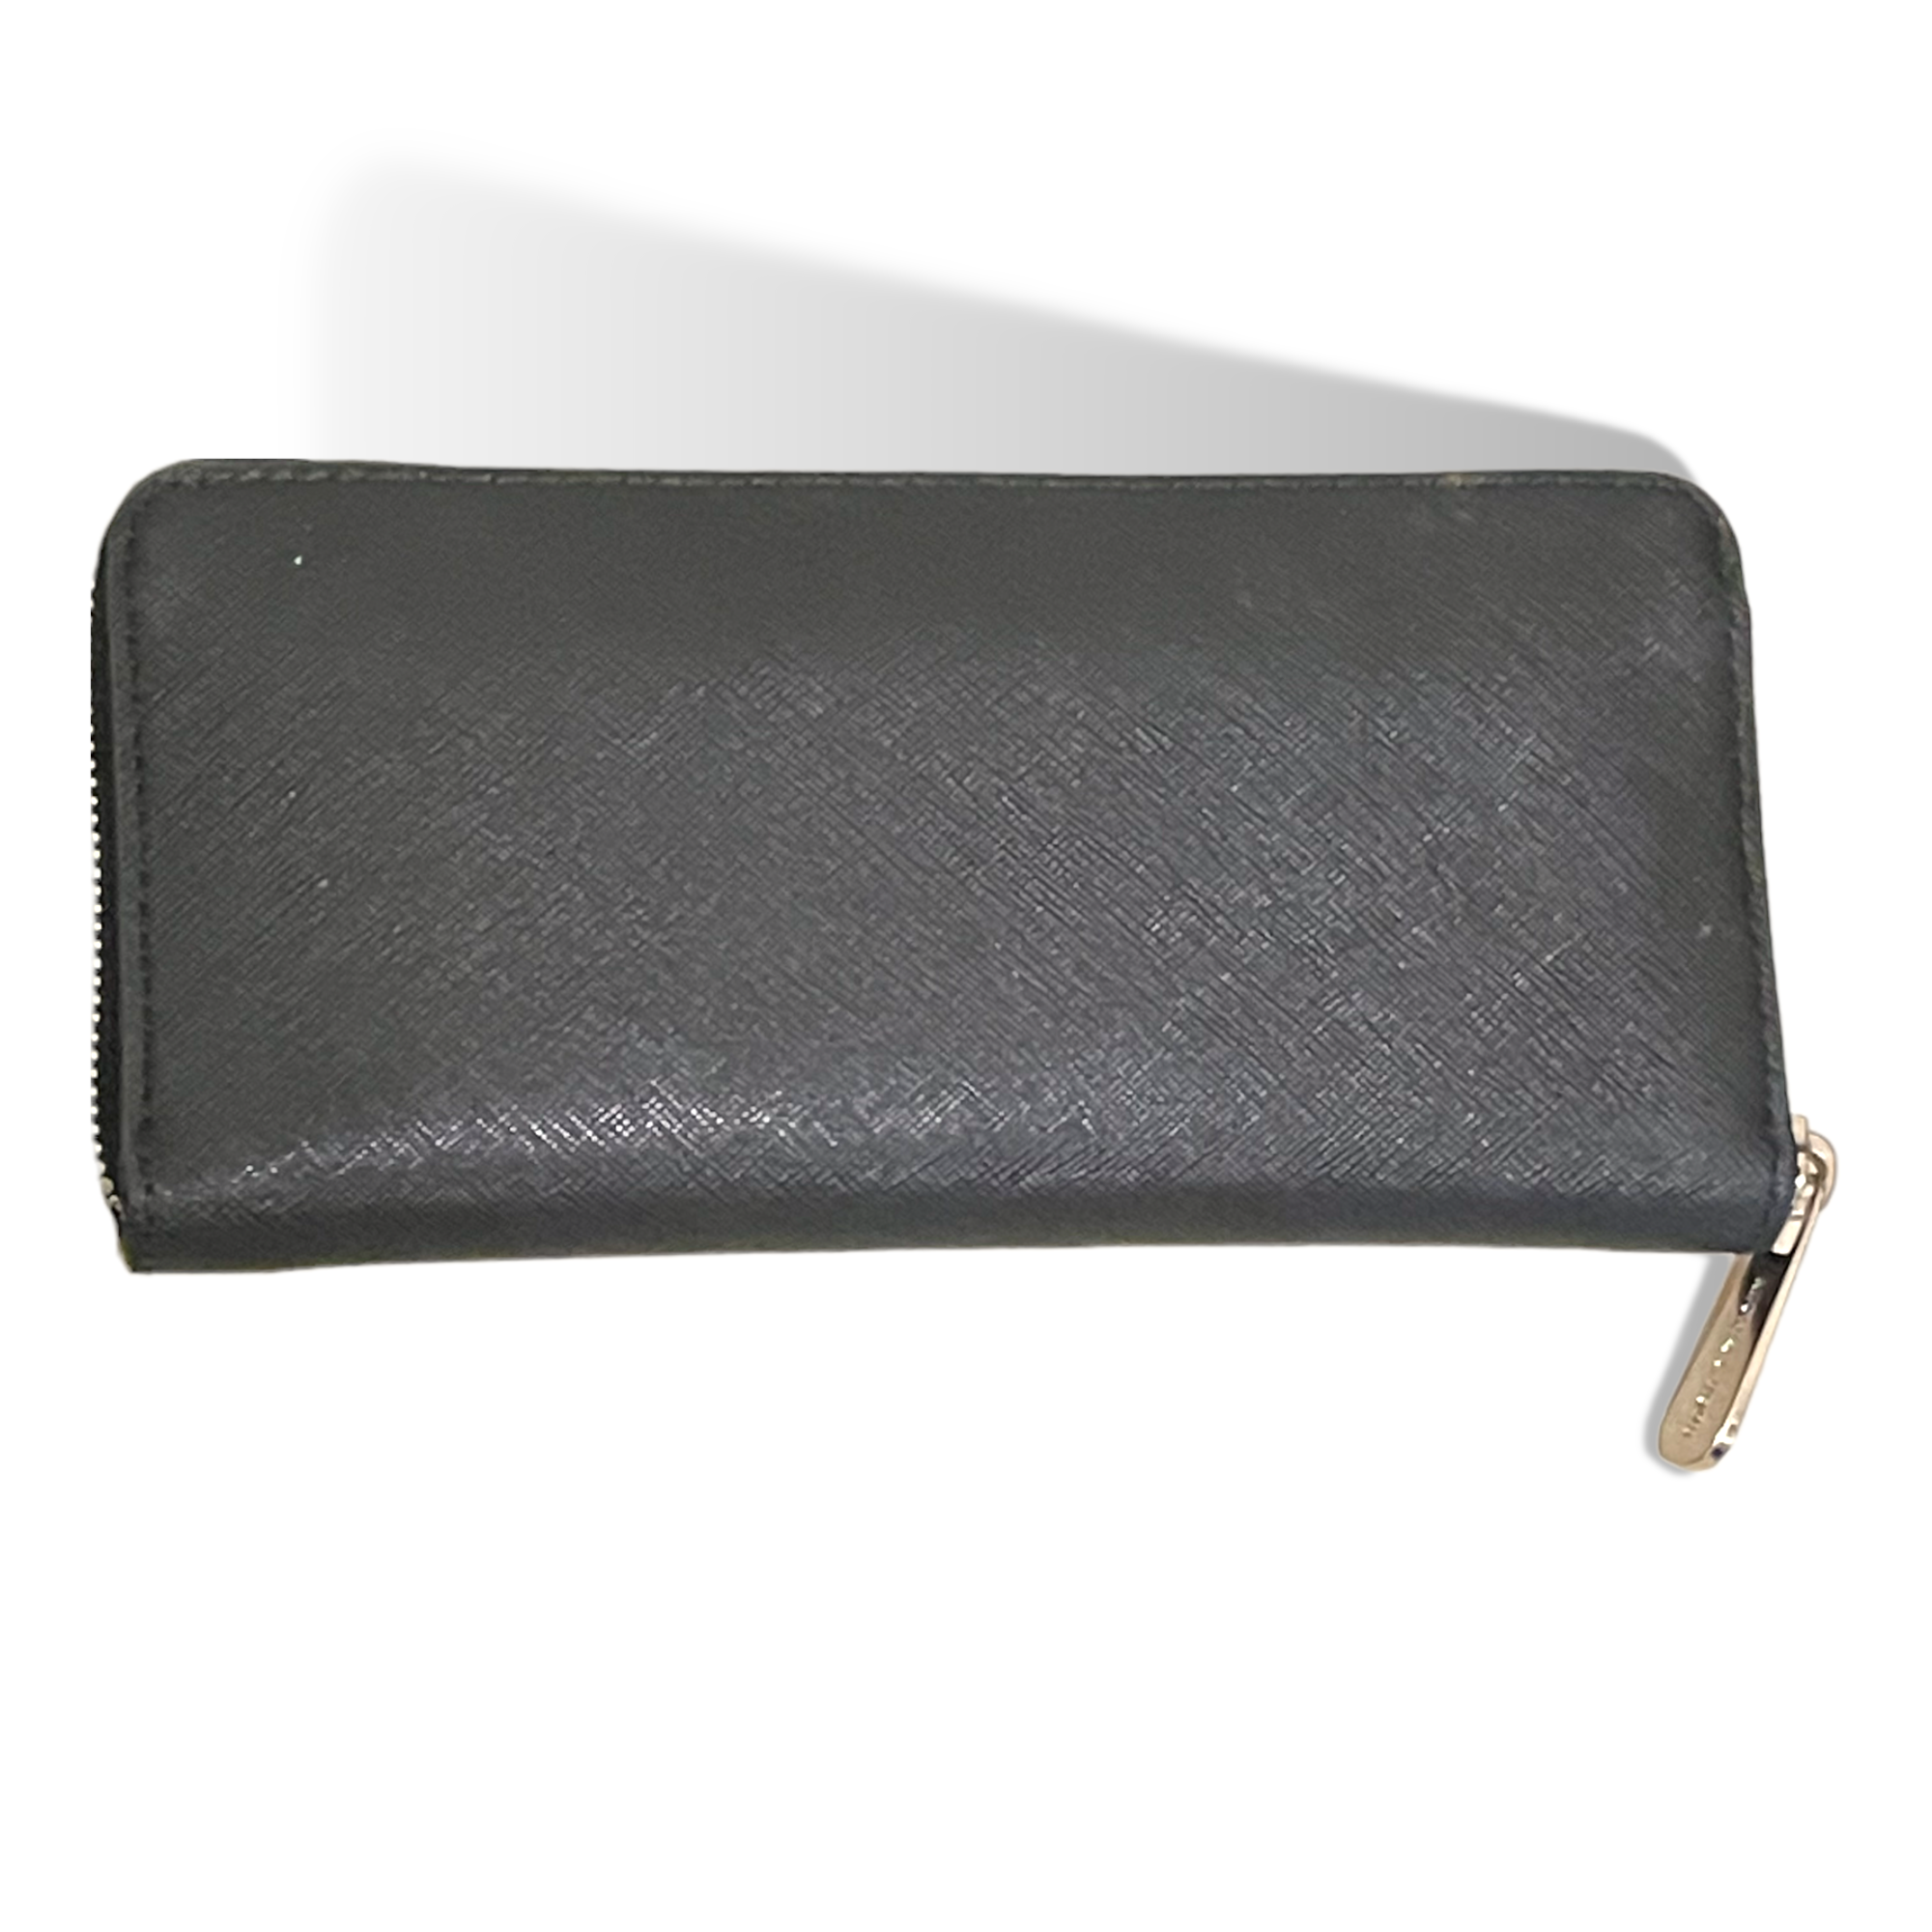 Michael Kors Black Saffiano Leather Zip Around Continental Wallet